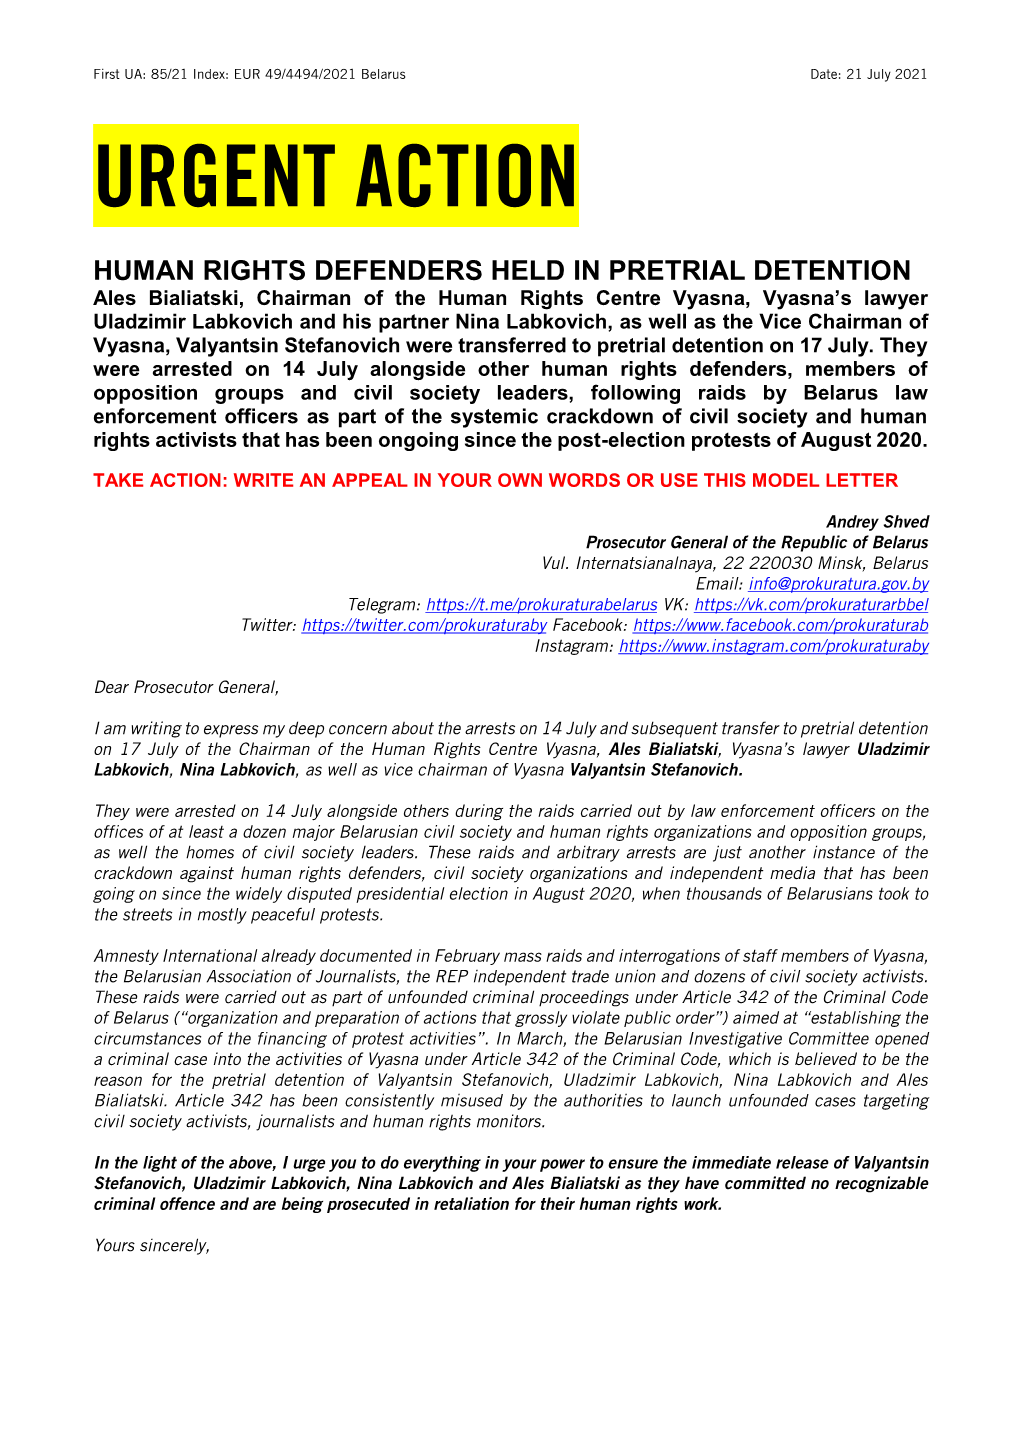 Human Rights Defenders Held in Pretrial Detention